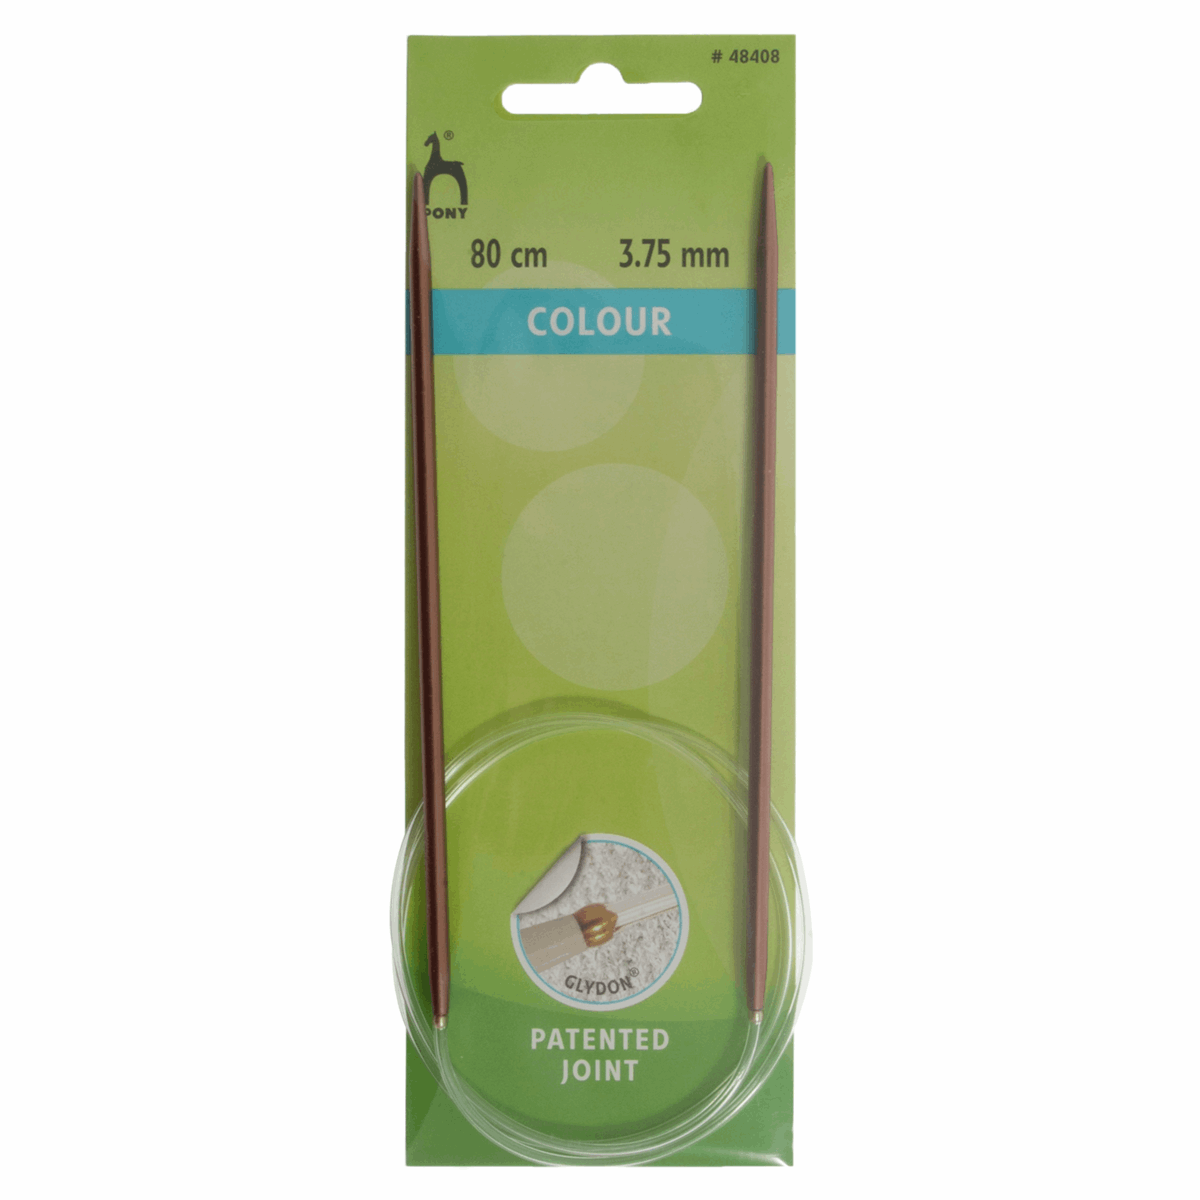 PONY Colour Circular Fixed Aluminium Knitting Pins - 80cm x 3.75mm